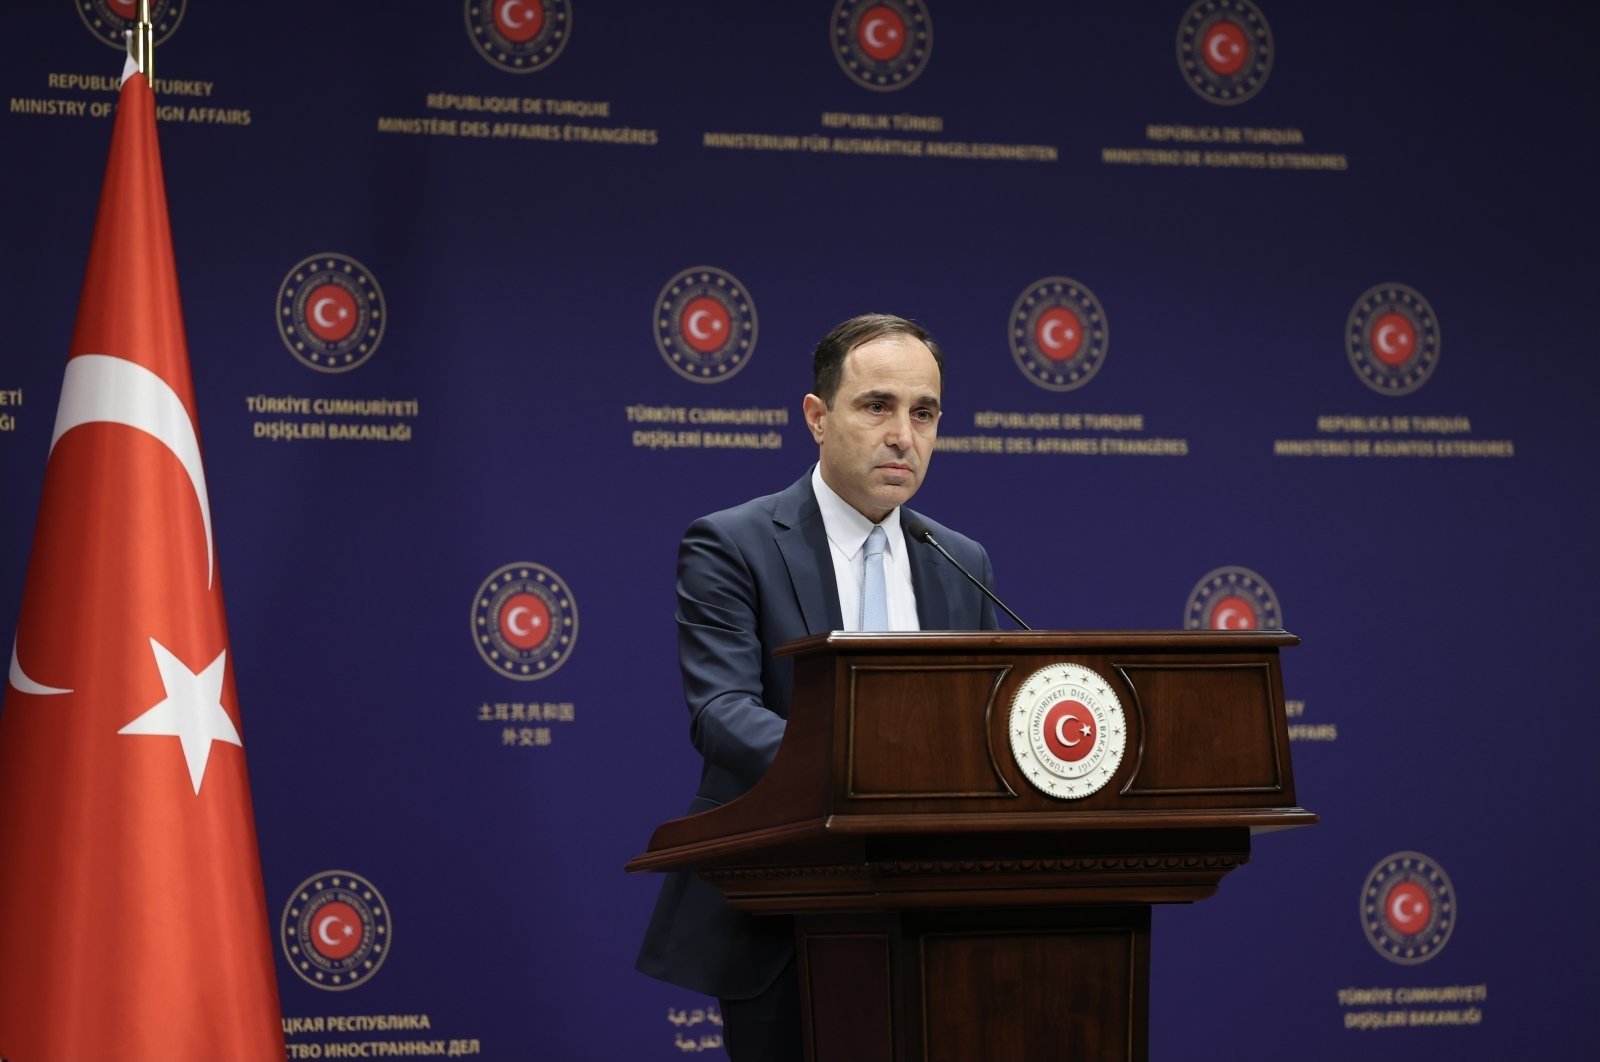 Foreign Ministry spokesperson Tanju Bilgiç listens during a press conference in Ankara, Turkey, June 25, 2021. (AA File Photo)